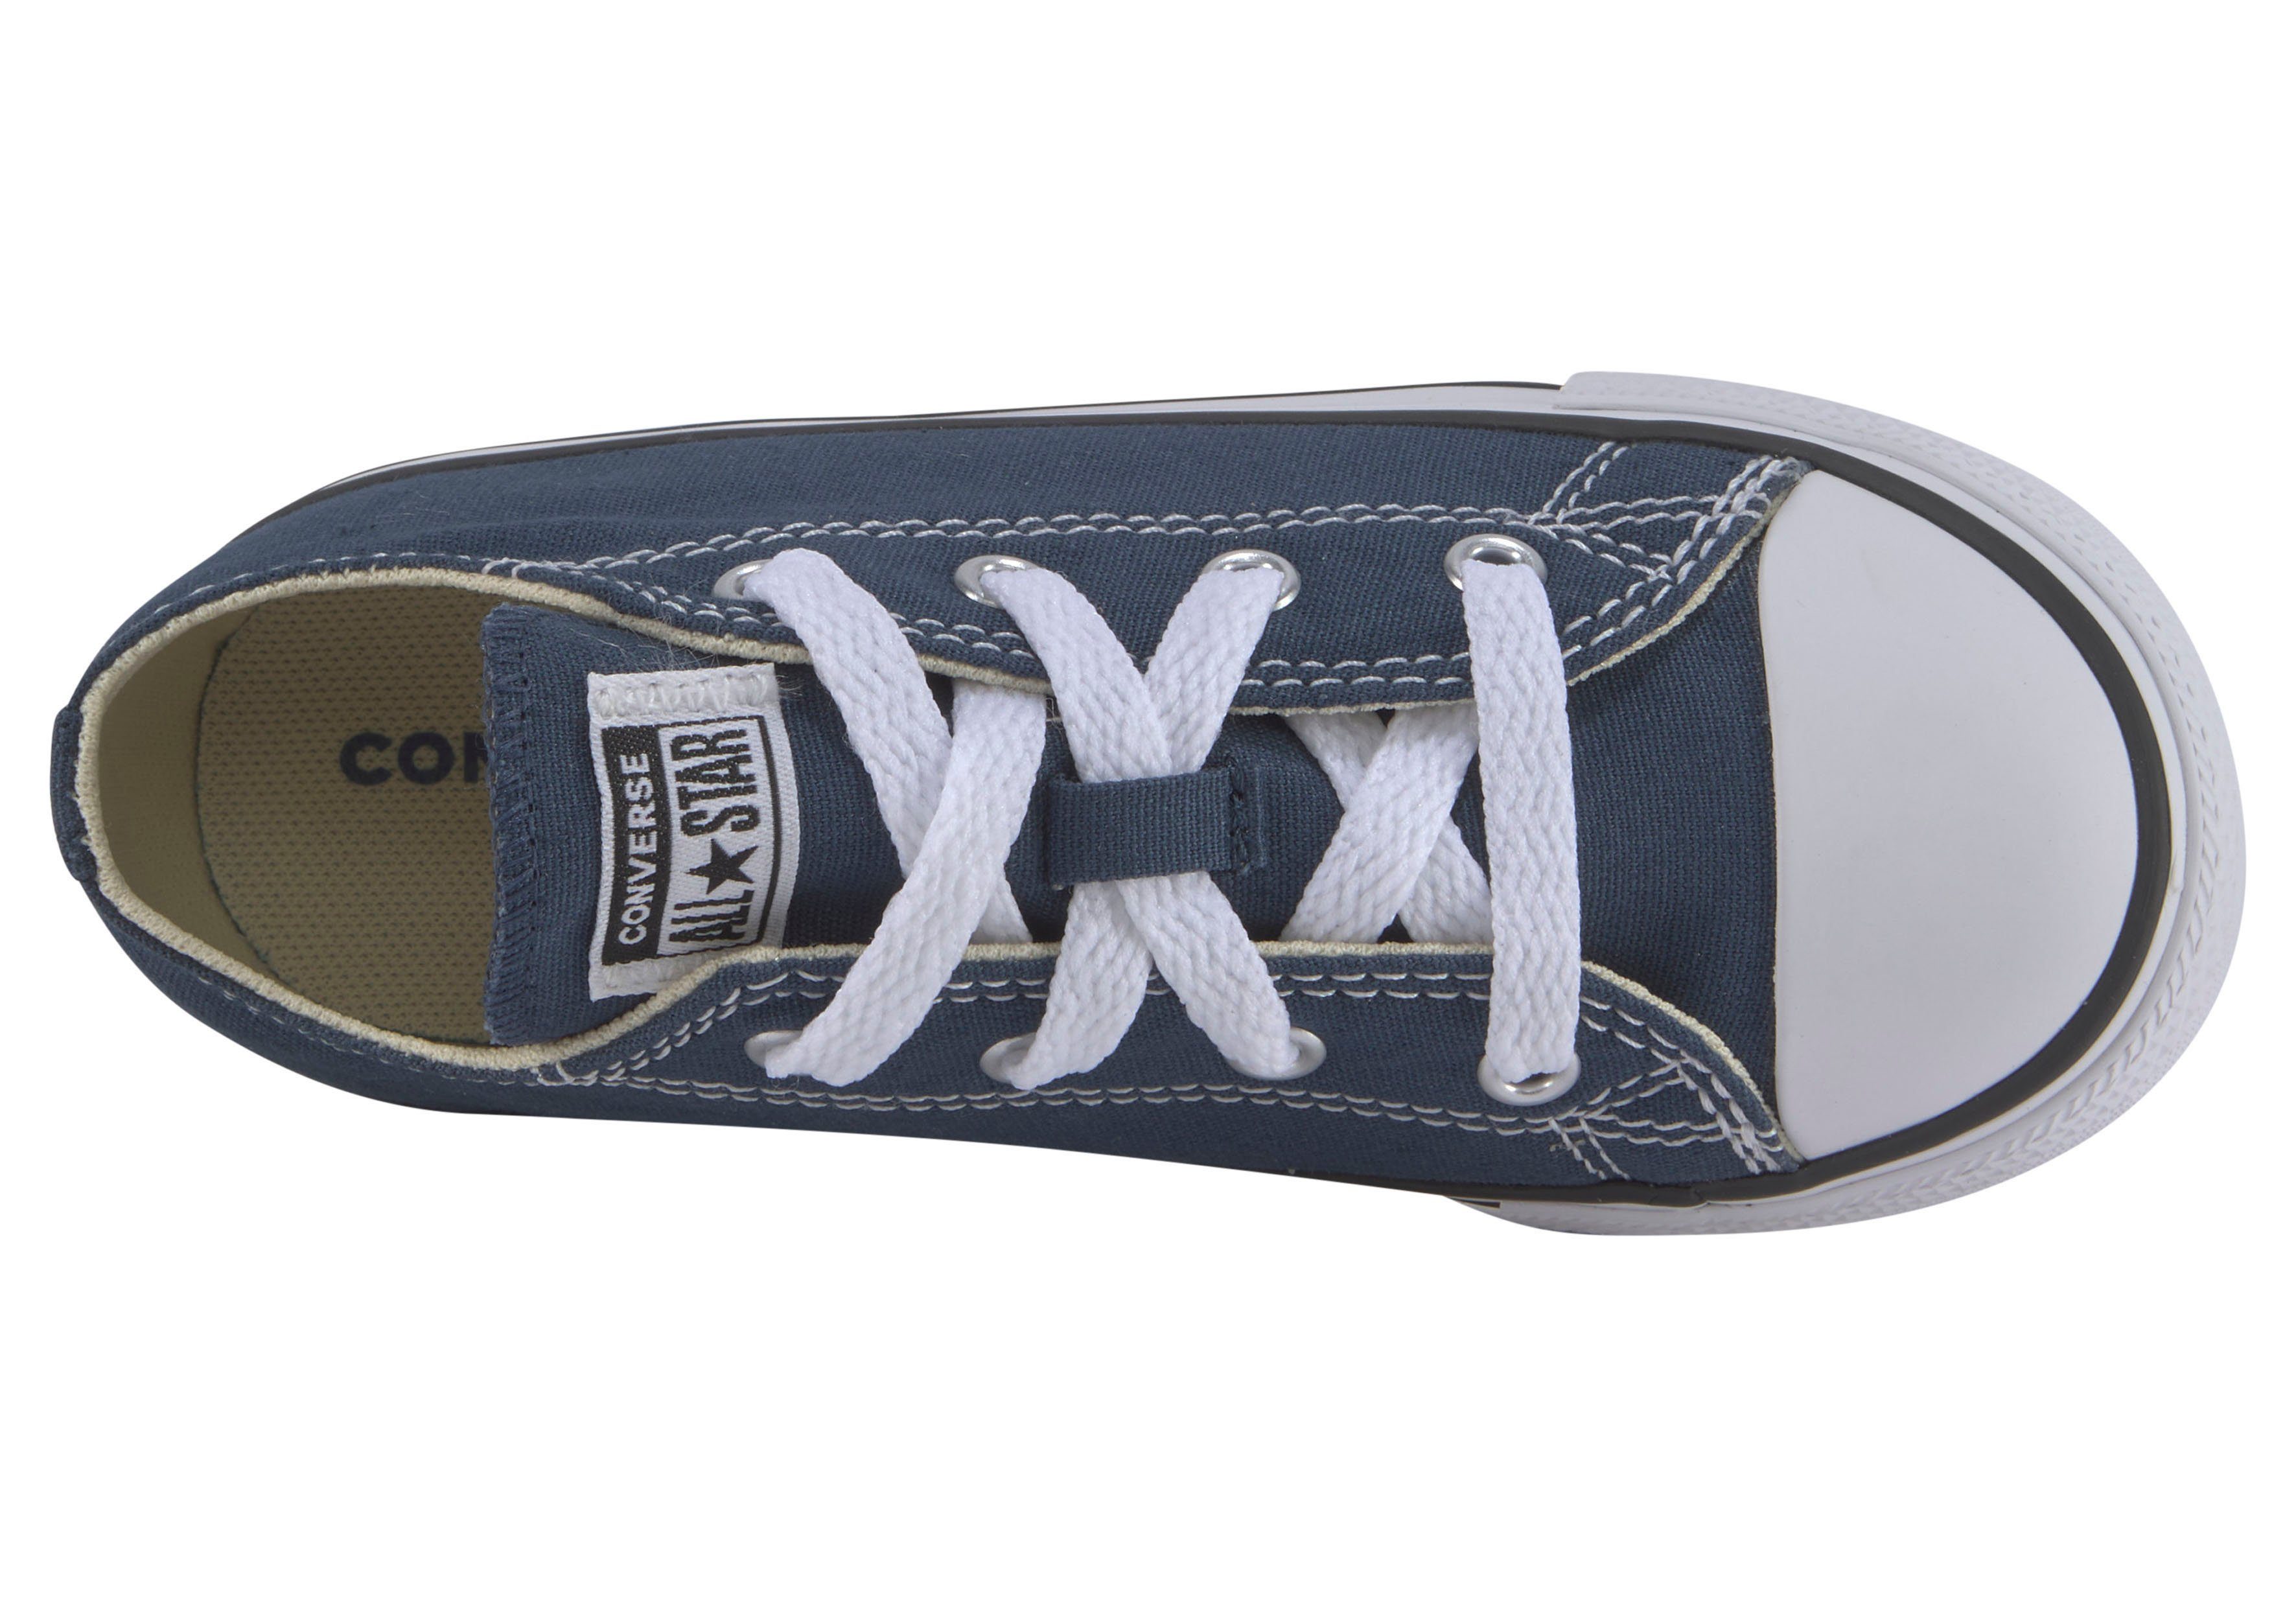 CHUCK Converse Kinder Sneaker ALL OX marine für TAYLOR STAR